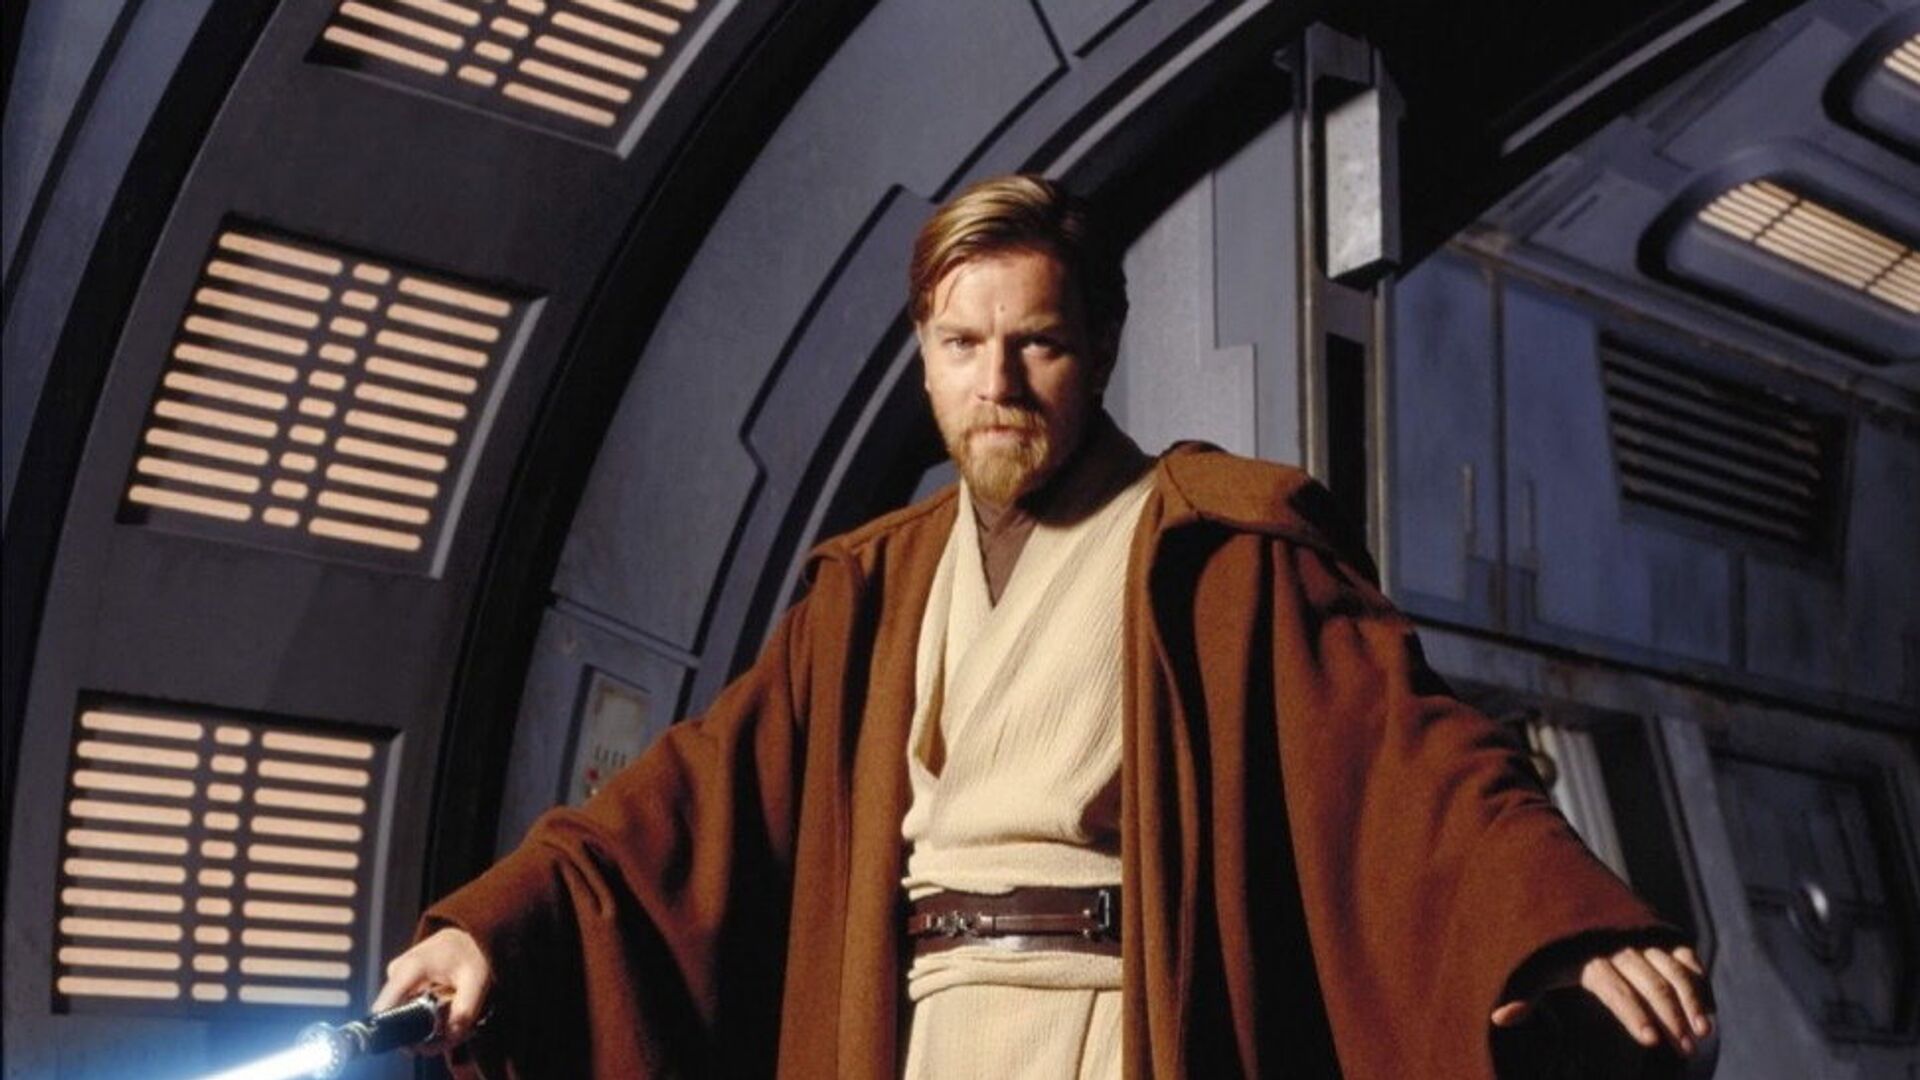 Съемки сериала про Оби-Ван Кеноби возобновятся после переделки сценария.